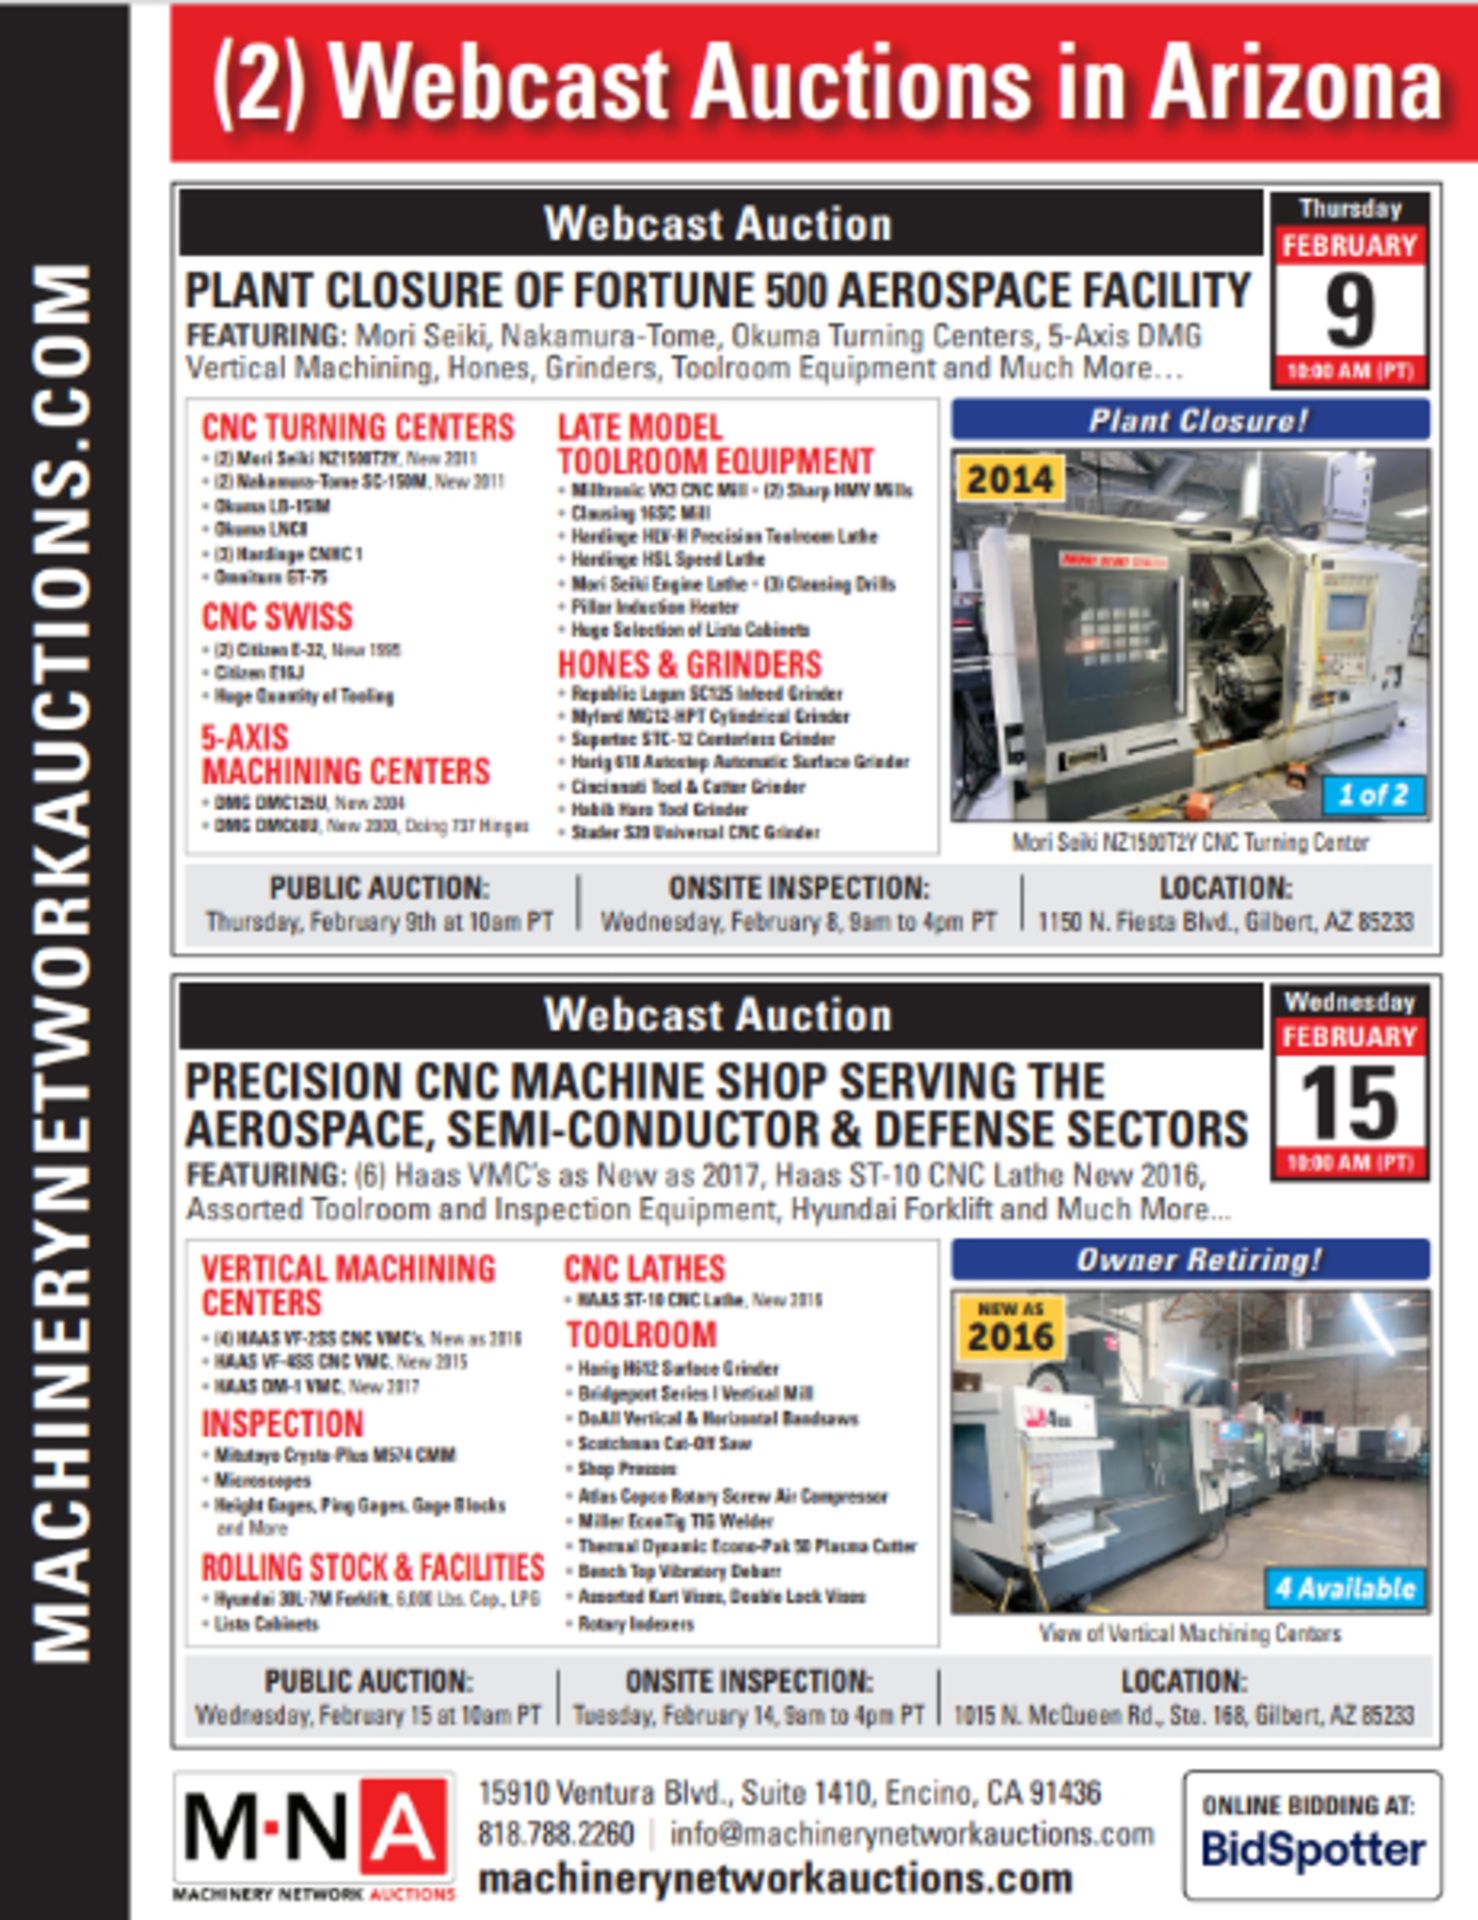 Owner Retiring - Precision CNC Machine Shop Serving the Aerospace, Semi-Conductor, & Defense Sectors